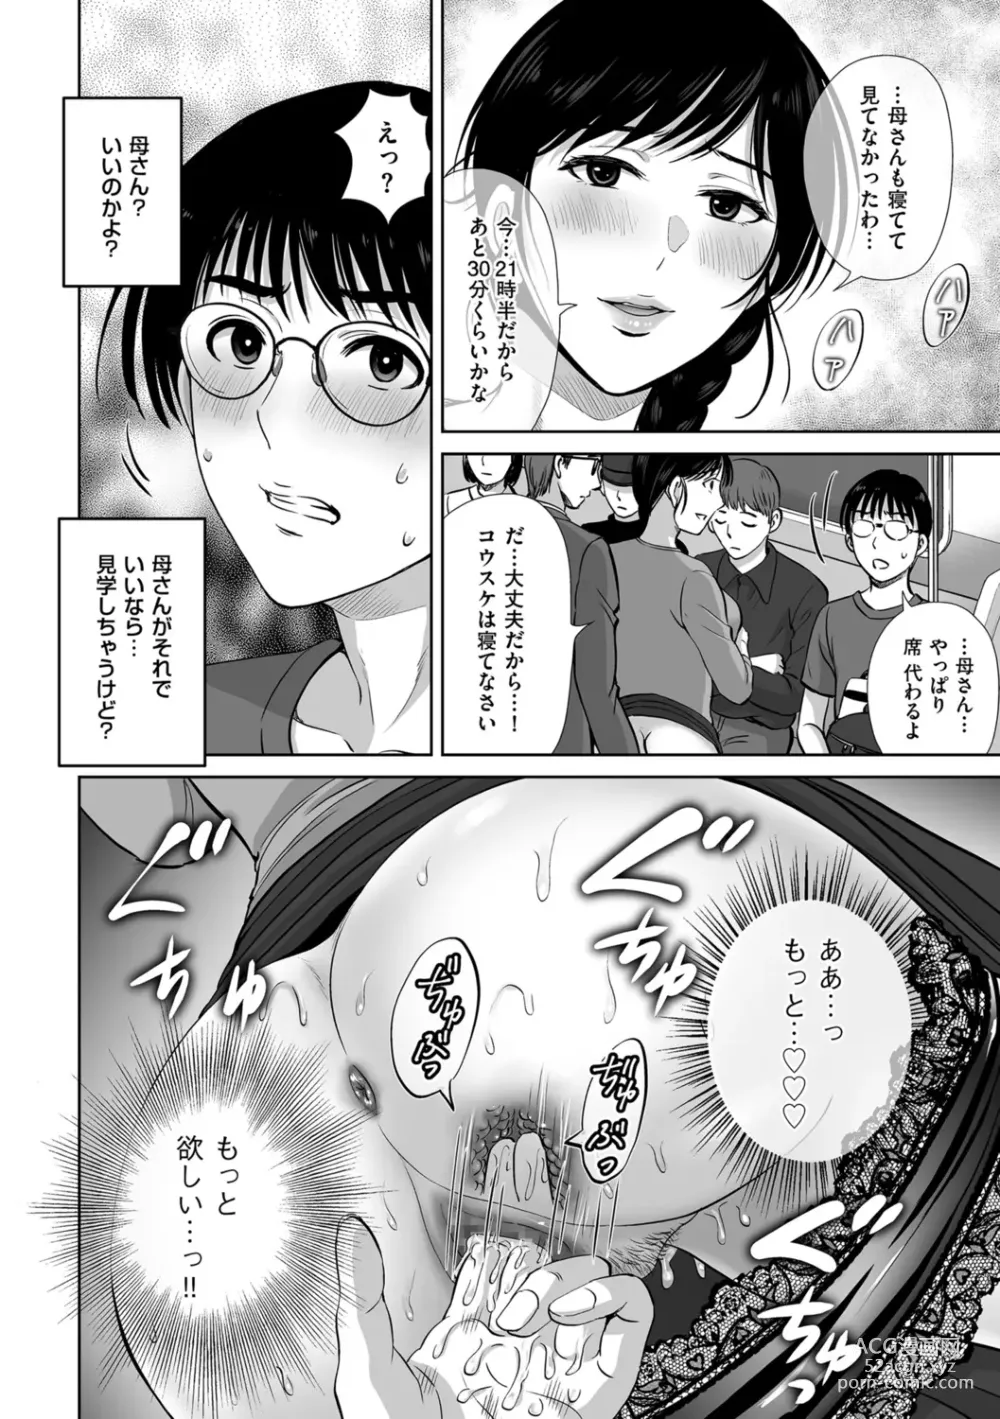 Page 12 of manga Mesuzakari no Haha-tachi e